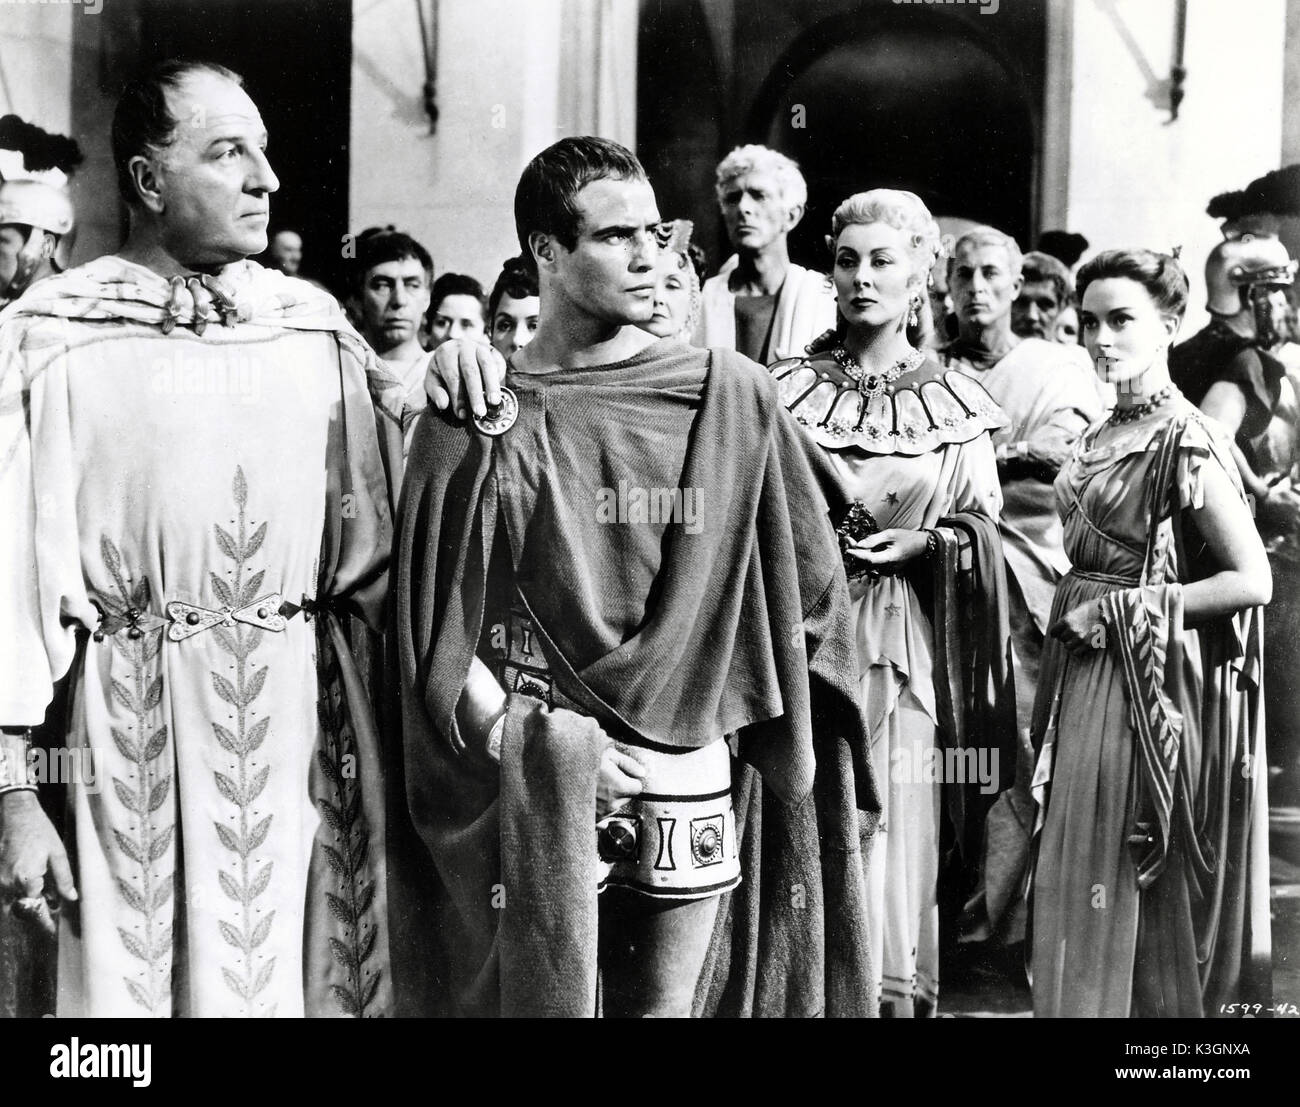 JULIUS CAESAR LOUIS CALHERN as Julius Caesar, MARLON BRANDO as Marc Antony, ALAN NAPIER as Cicero, GREER GARSON as Calpurnia, DEBORAH KERR as Portia Stock Photo